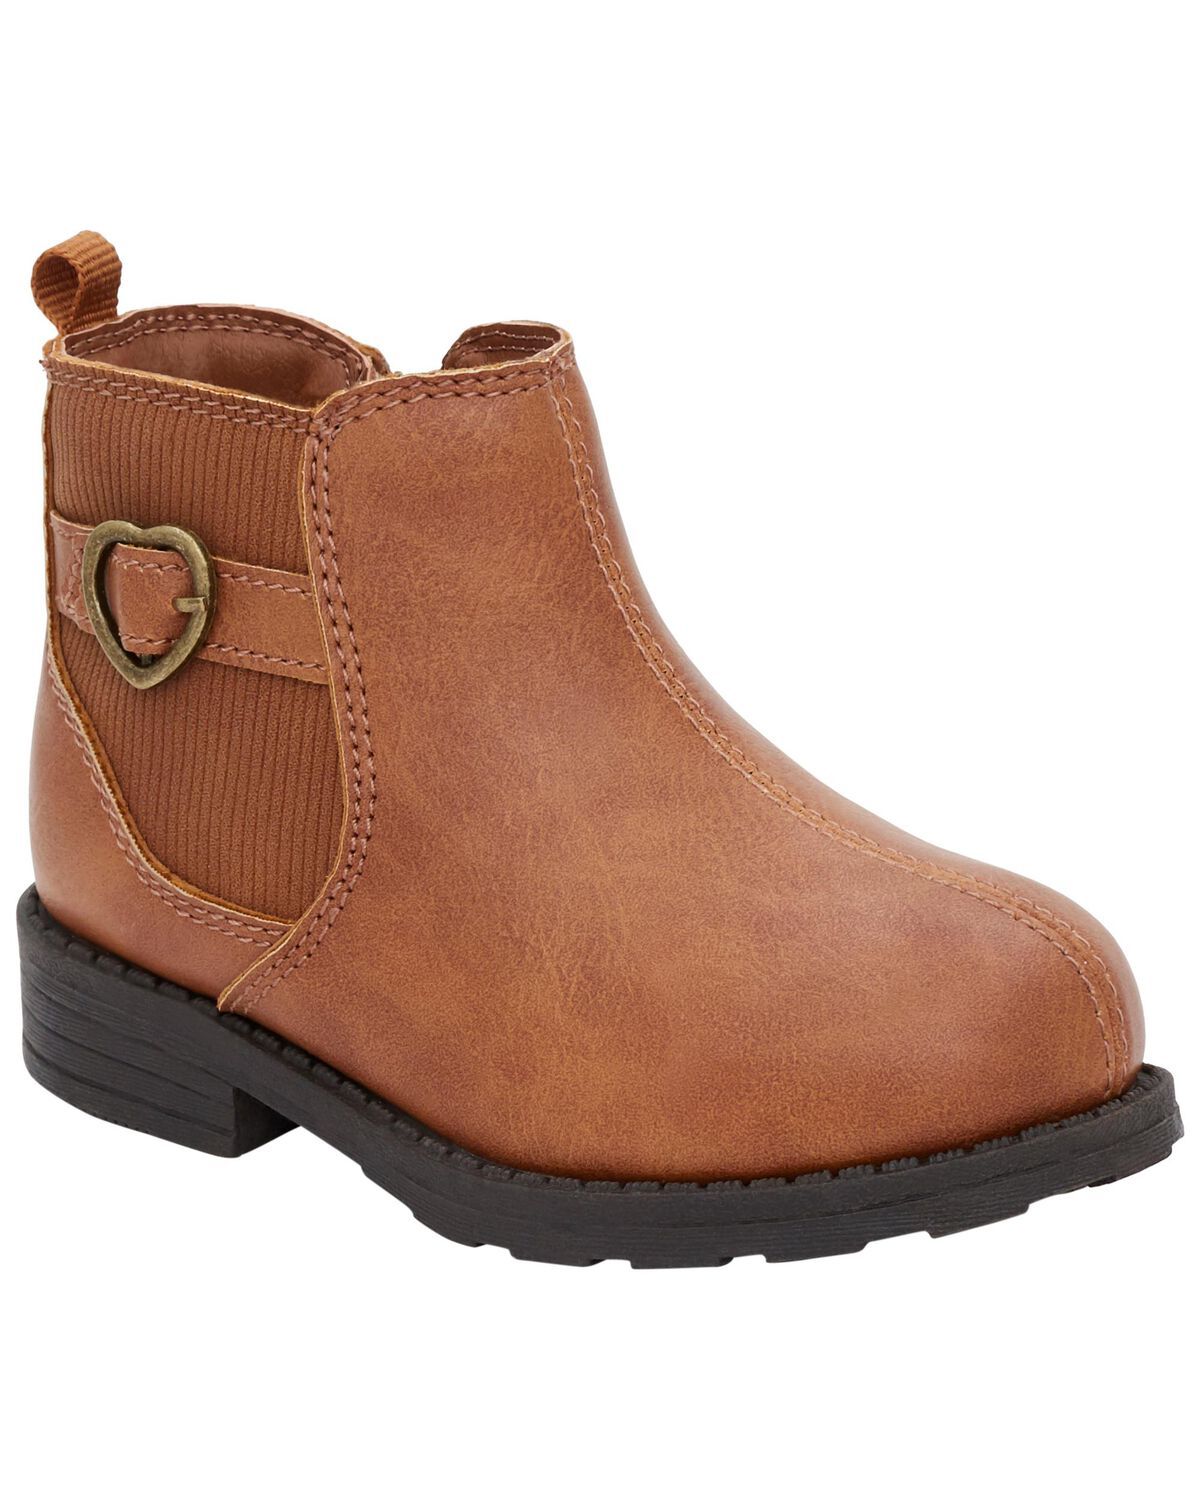 Brown Toddler Heart Buckle Boots | carters.com | OshKosh B'gosh